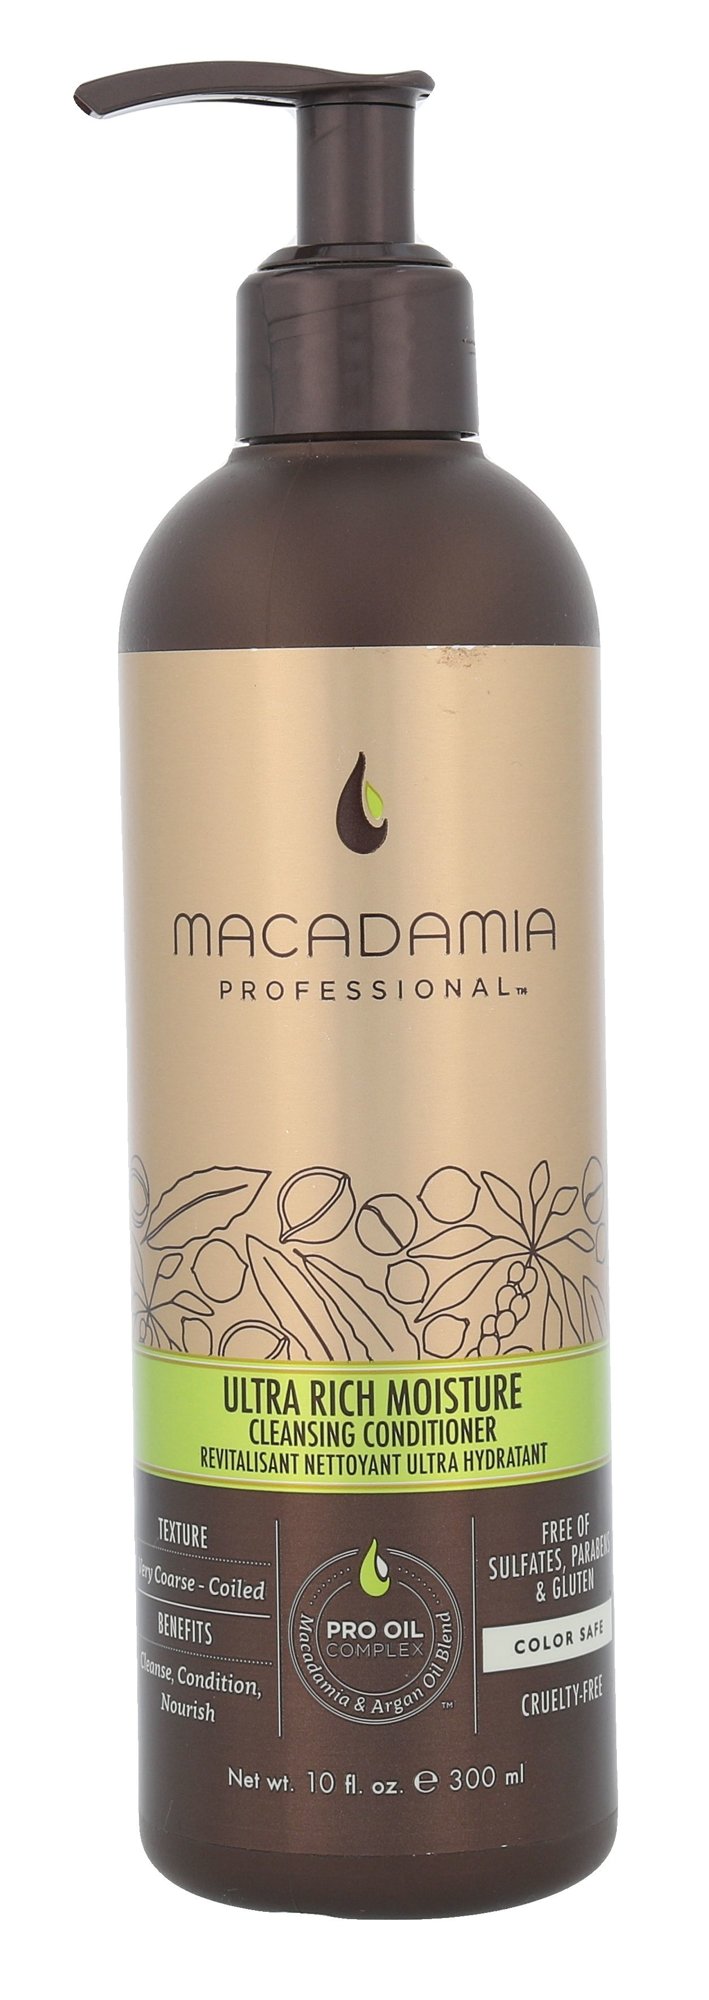 Macadamia Professional Ultra Rich Moisture Cleansing kondicionierius